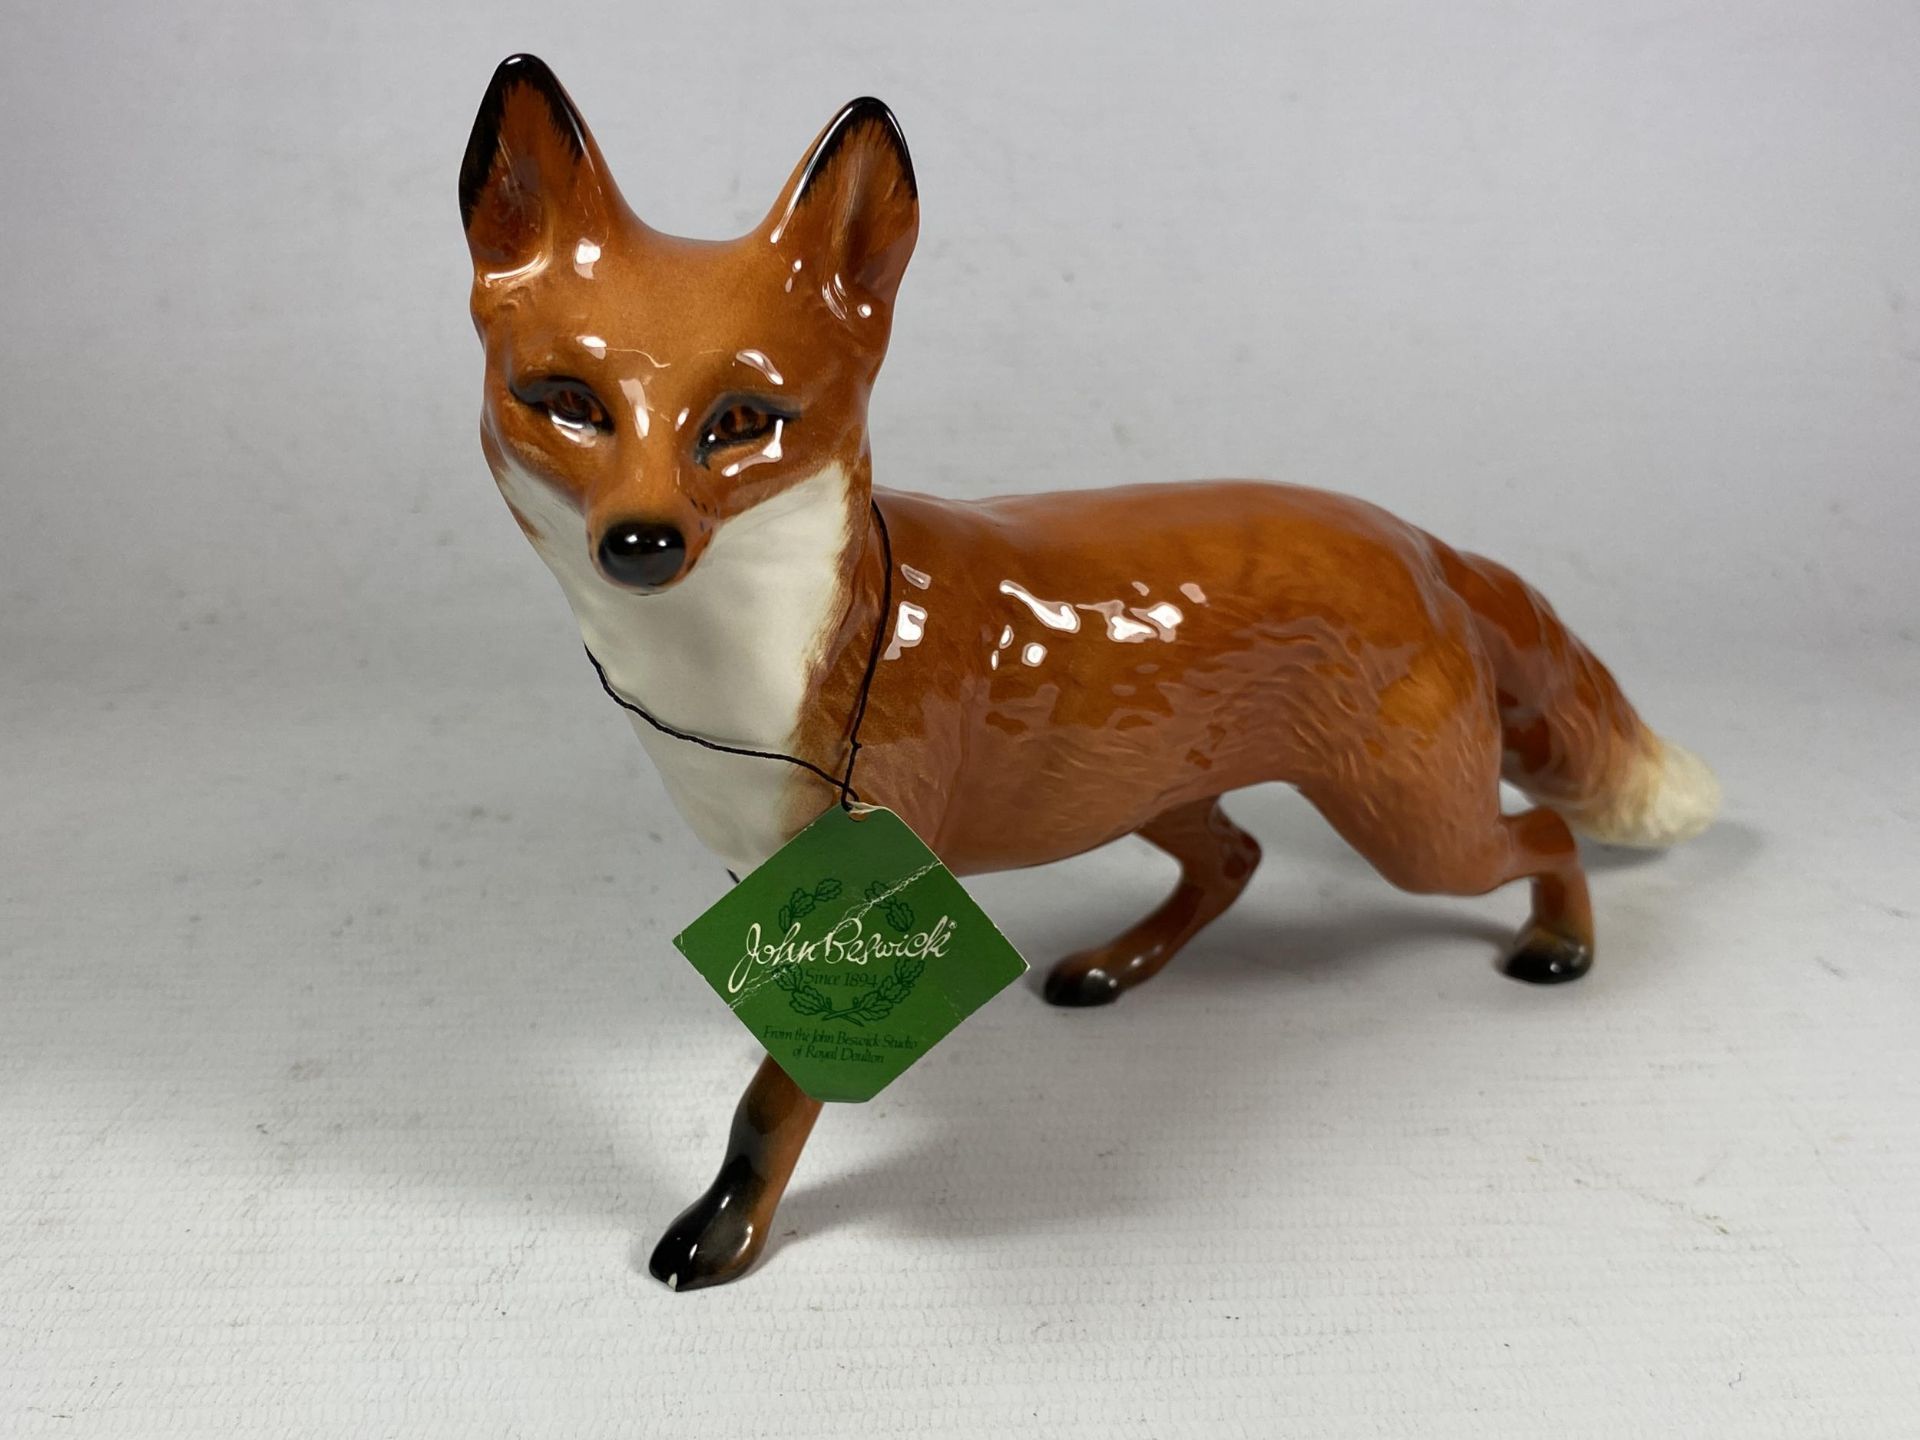 A BESWICK POTTERY MODEL OF A FOX